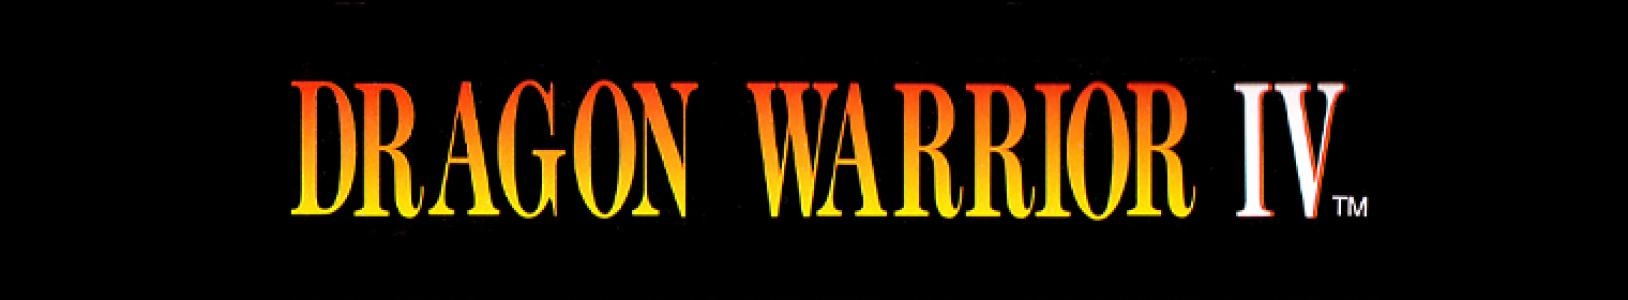 Dragon Warrior IV banner